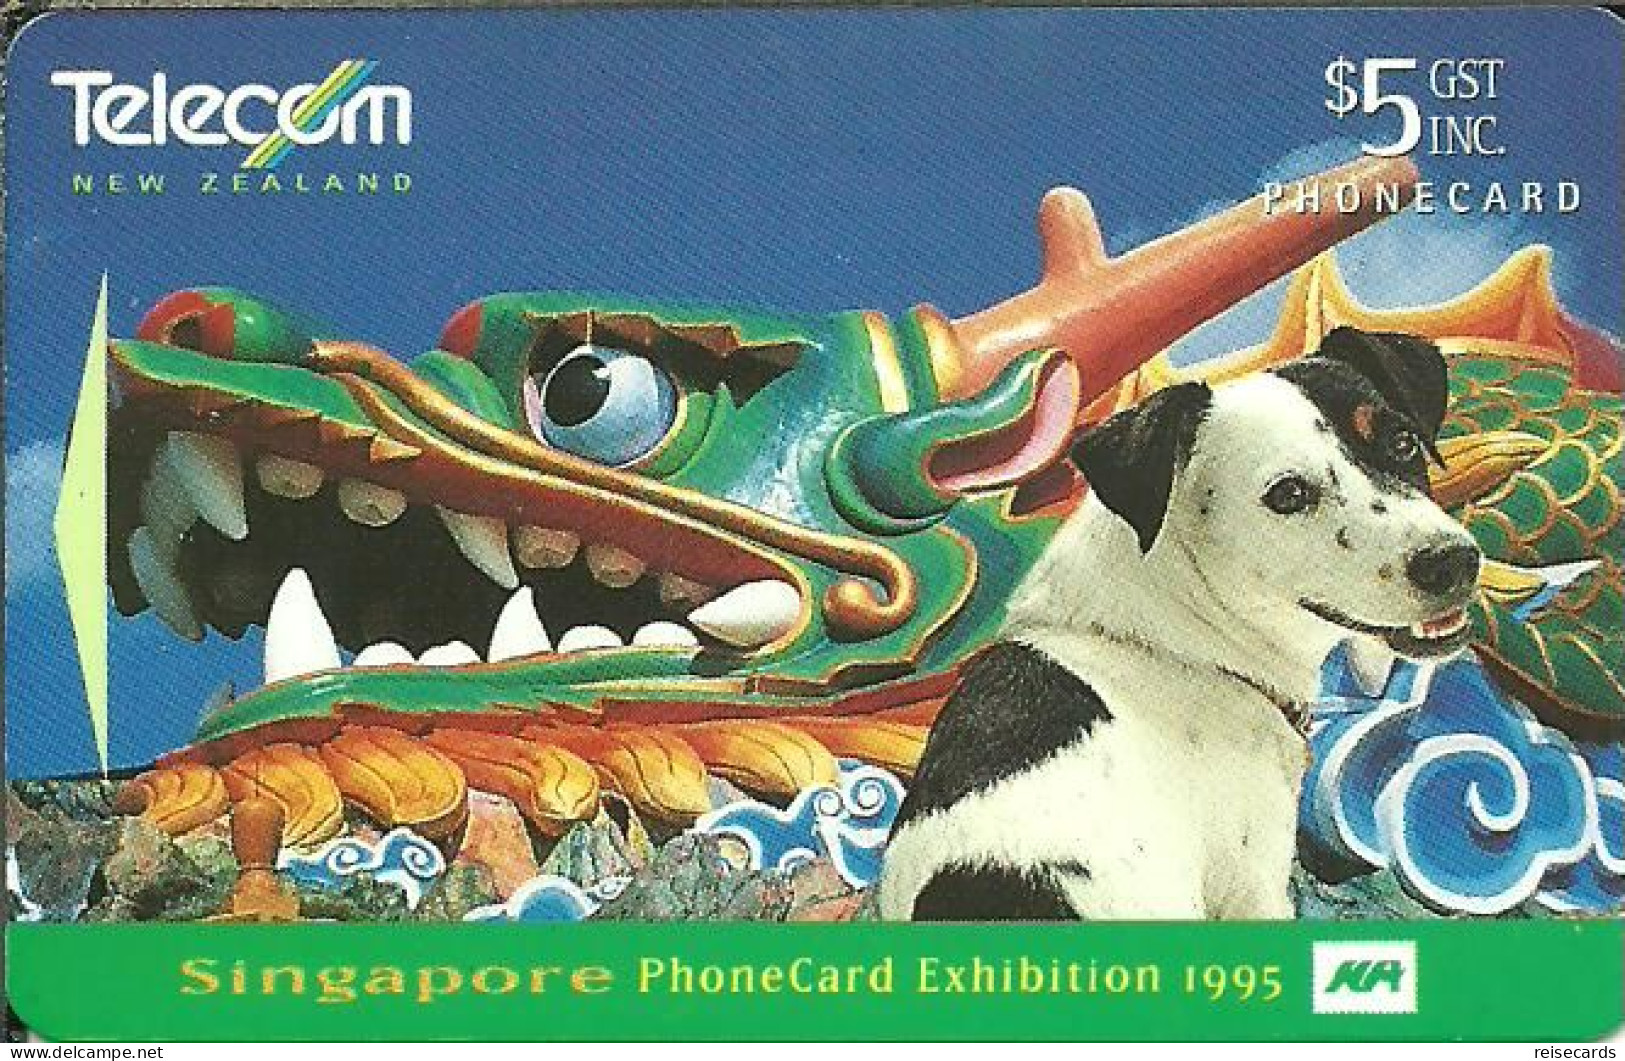 New Zealand: Telecom - 1995 Phonecard Exhibition Singapore, Spot At Dragonworld Park - Nieuw-Zeeland